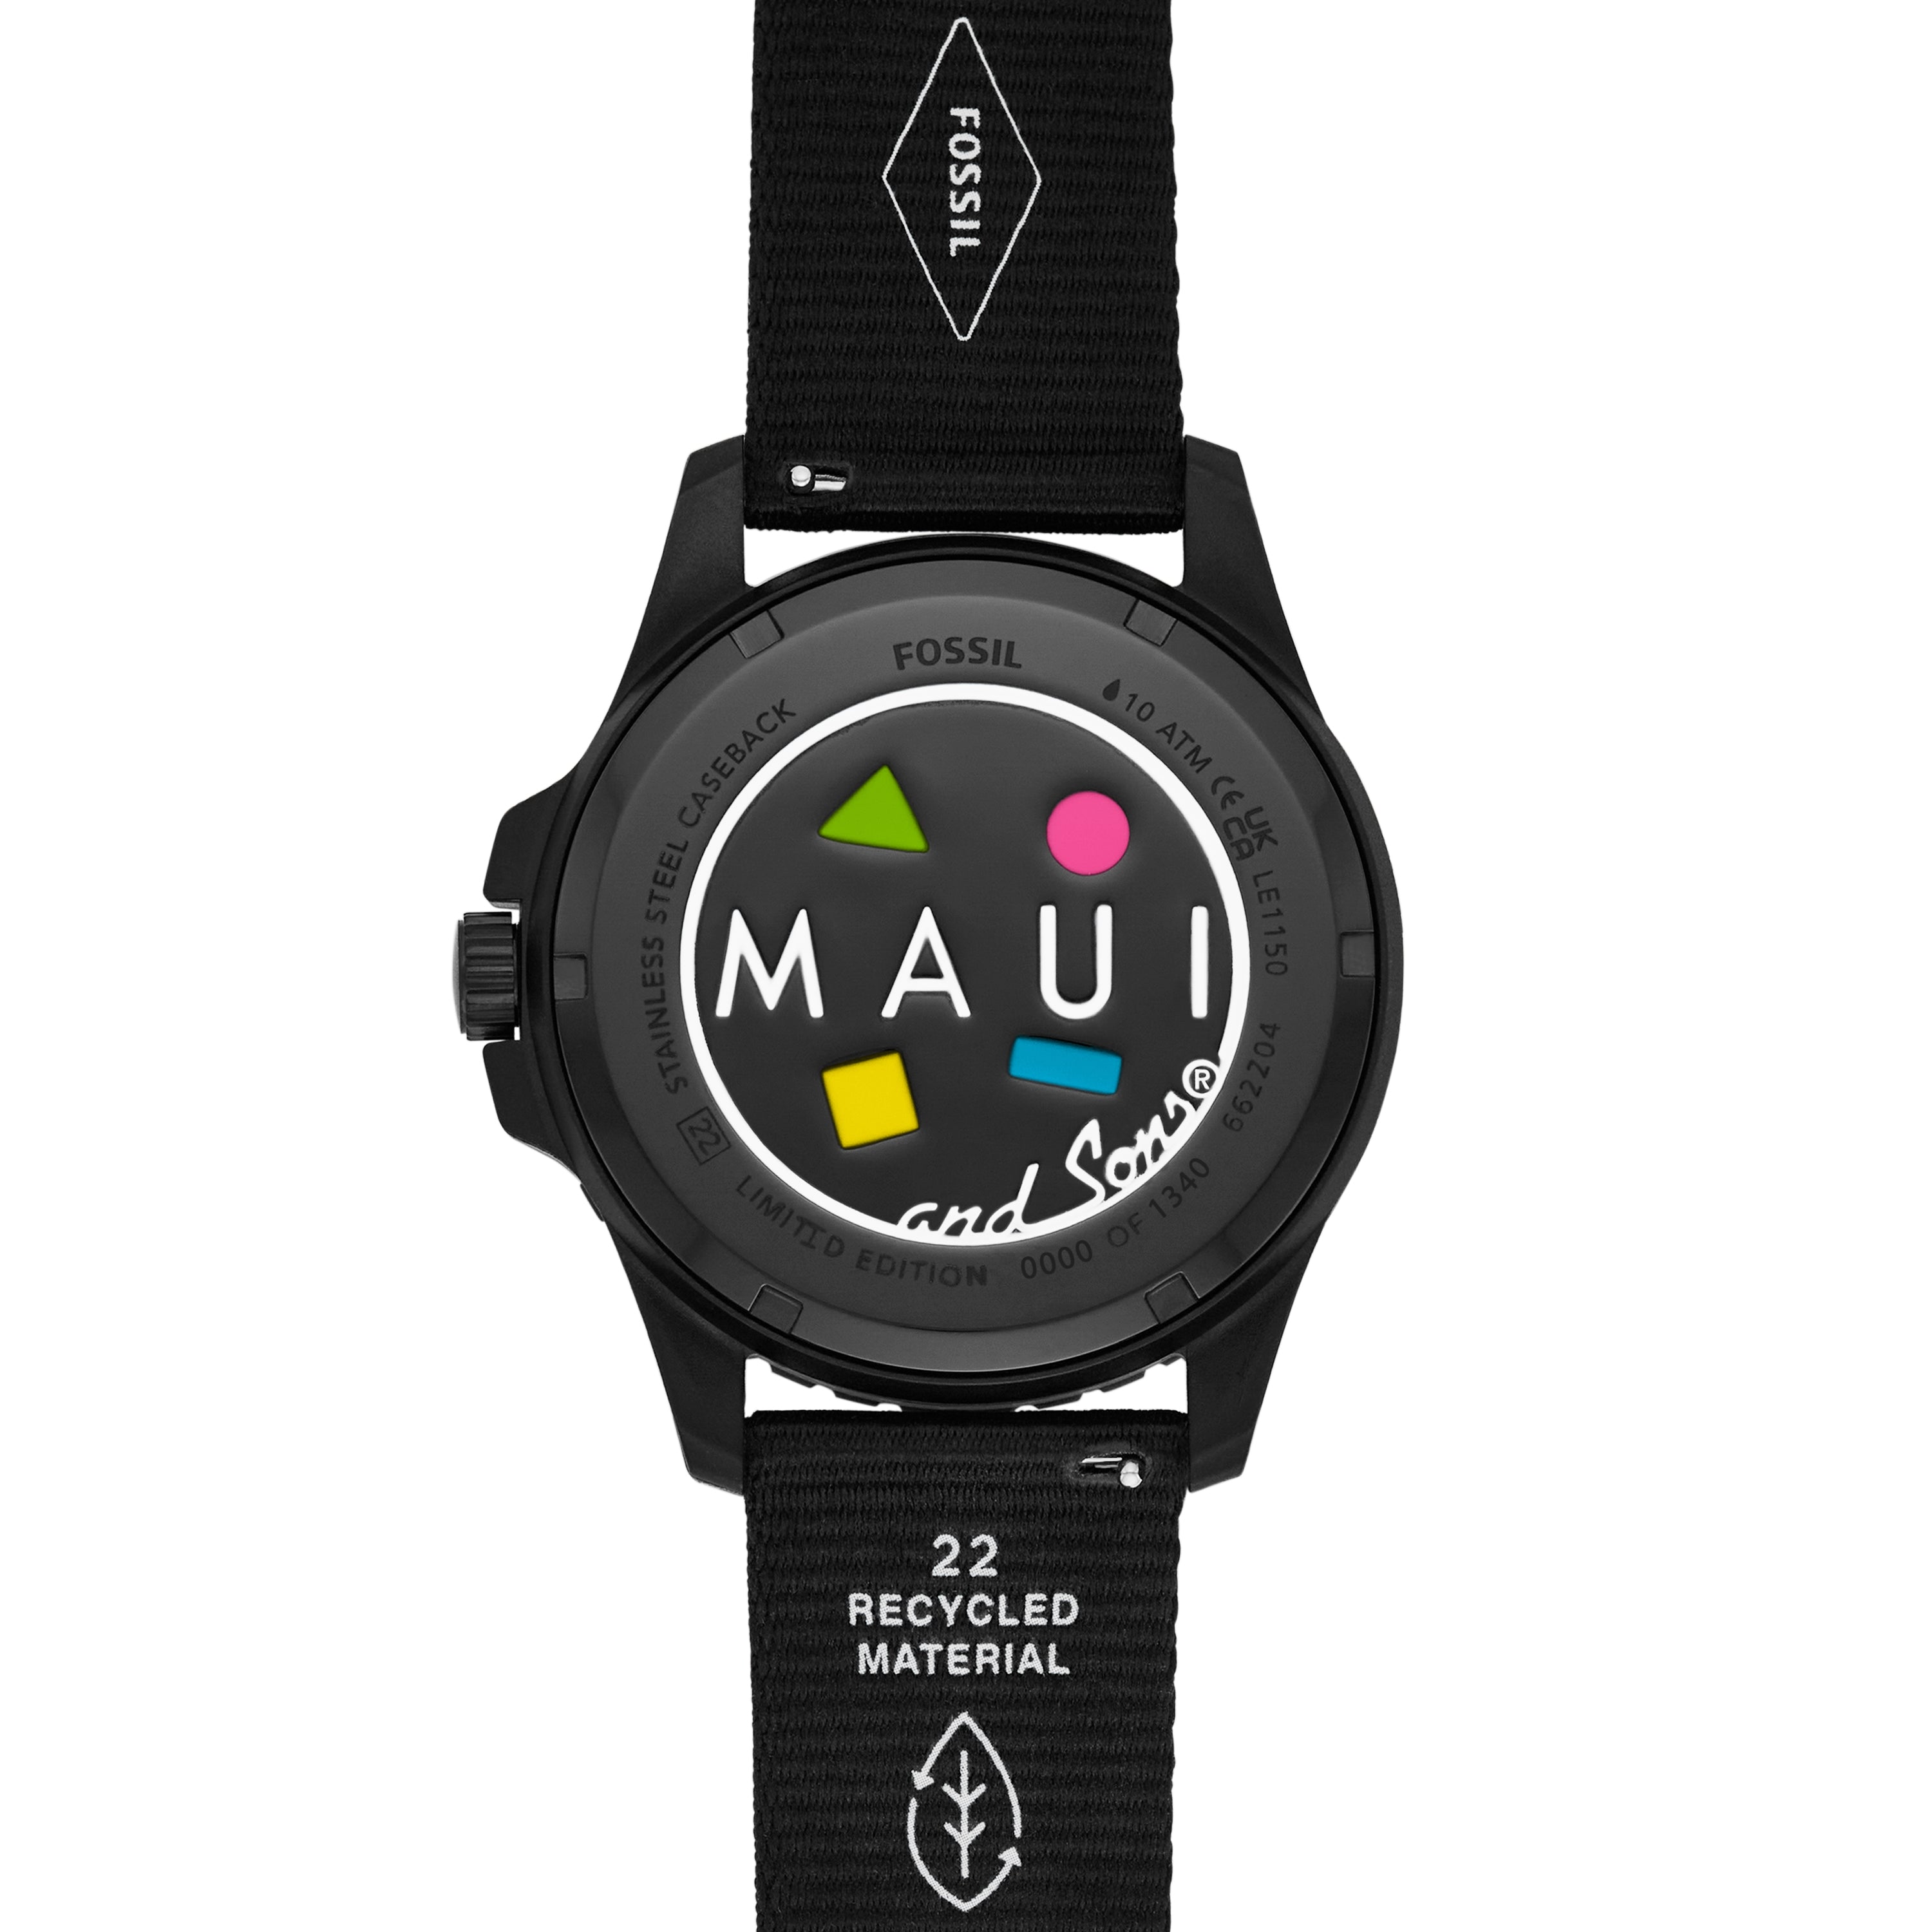 Maui and Sons x Fossil FB-01 Solarbetriebene Uhr